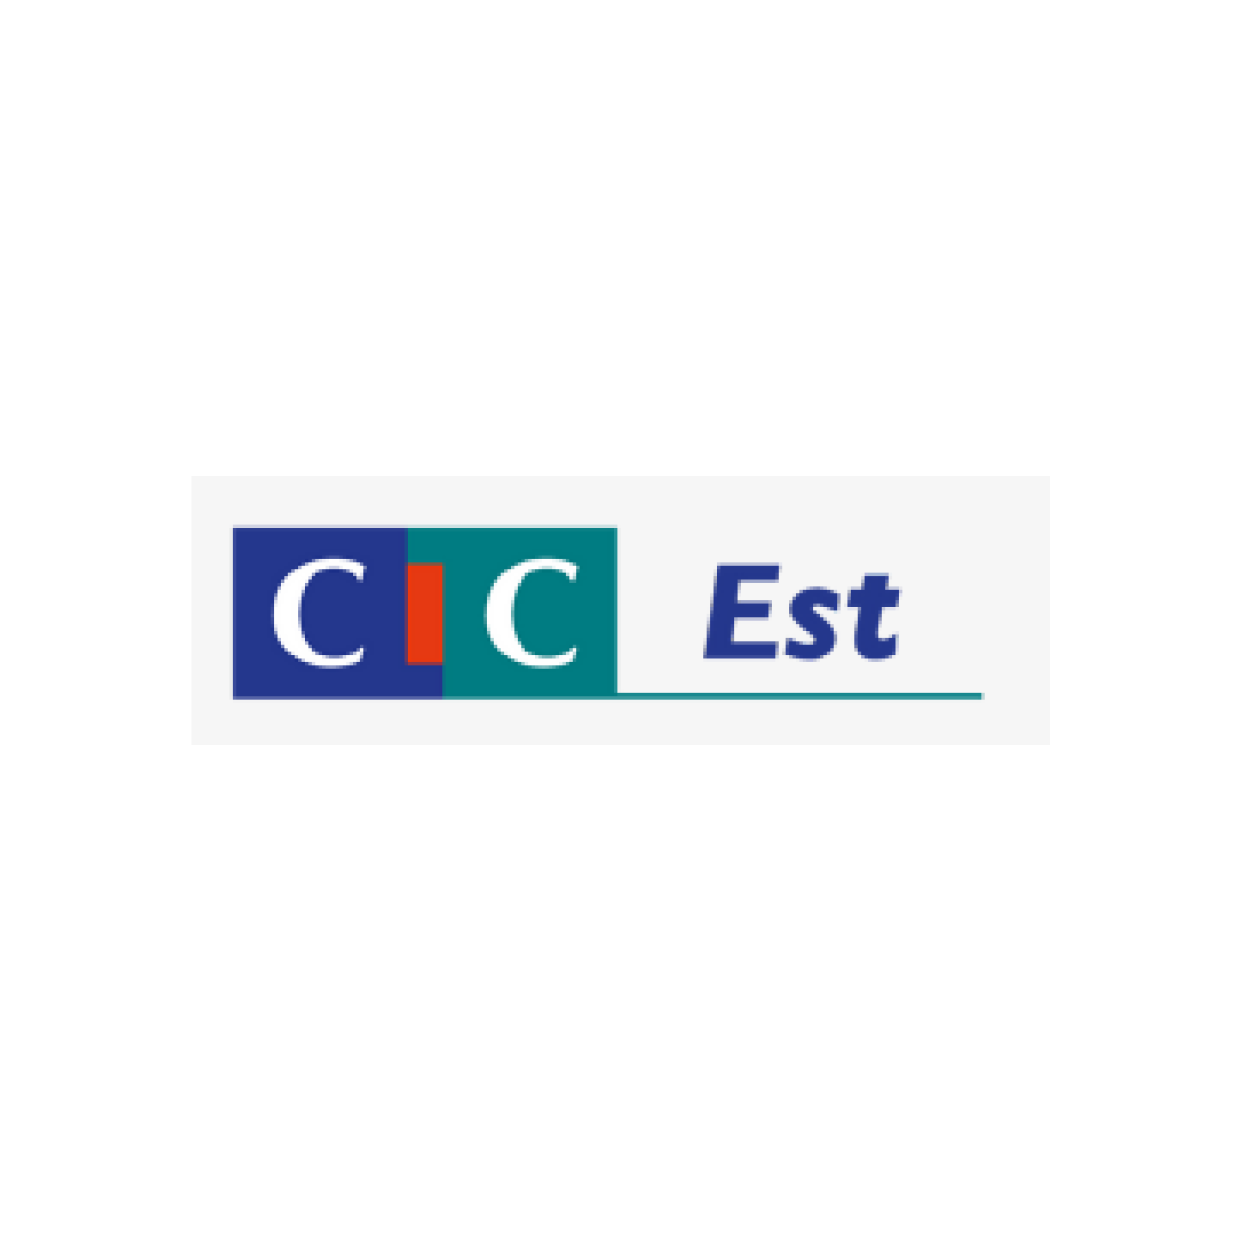 CIC Est